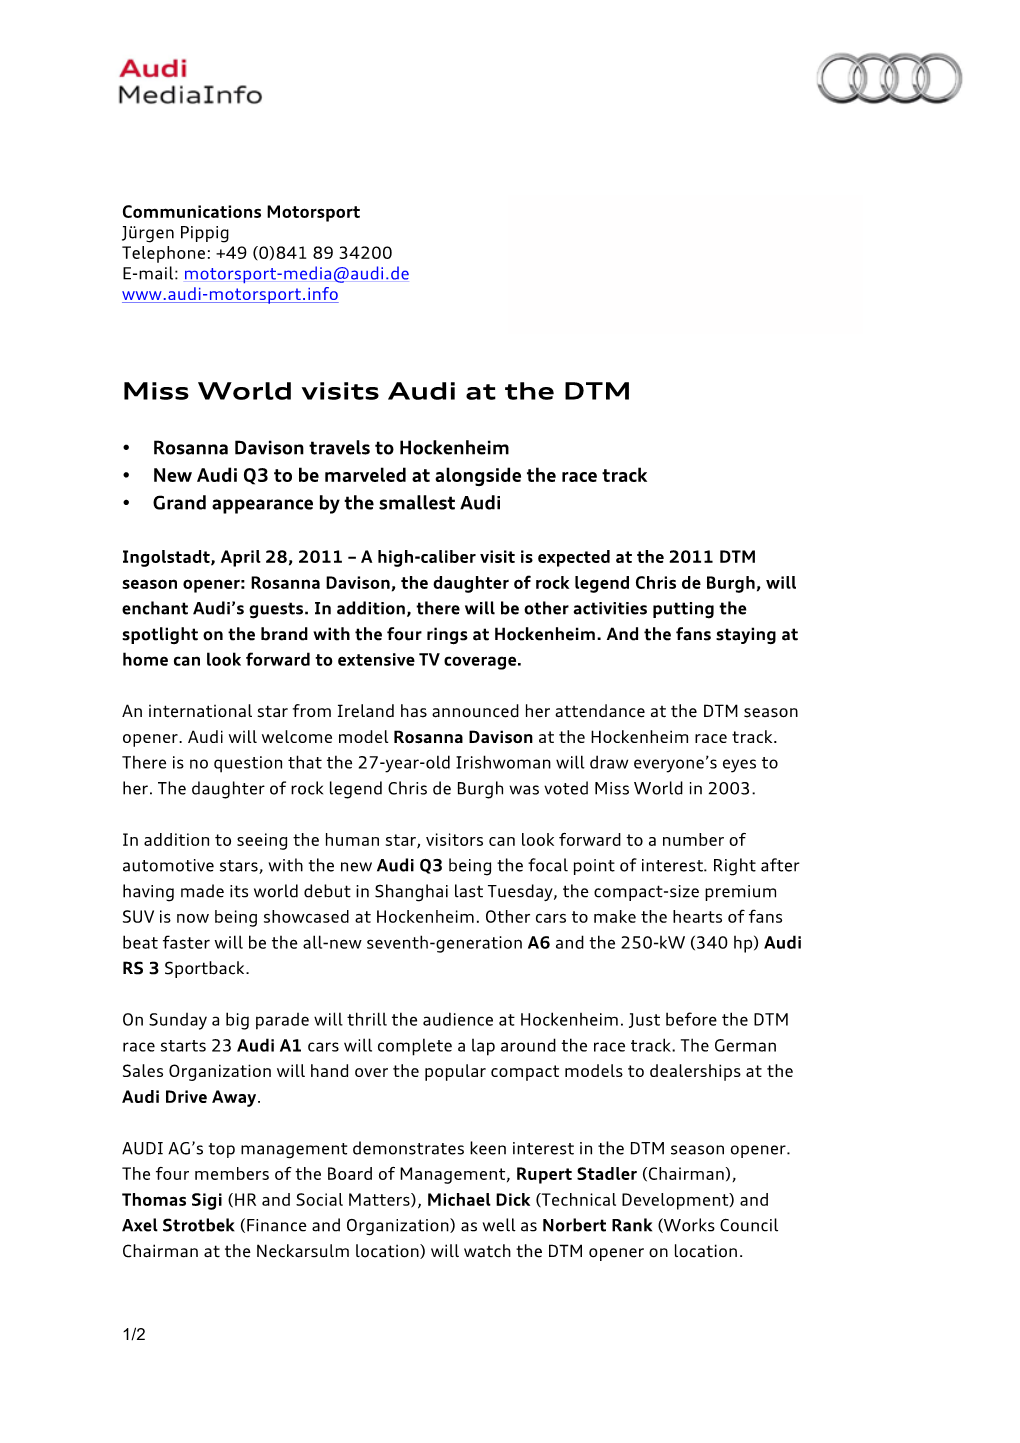 Miss World Visits Audi at the DTM